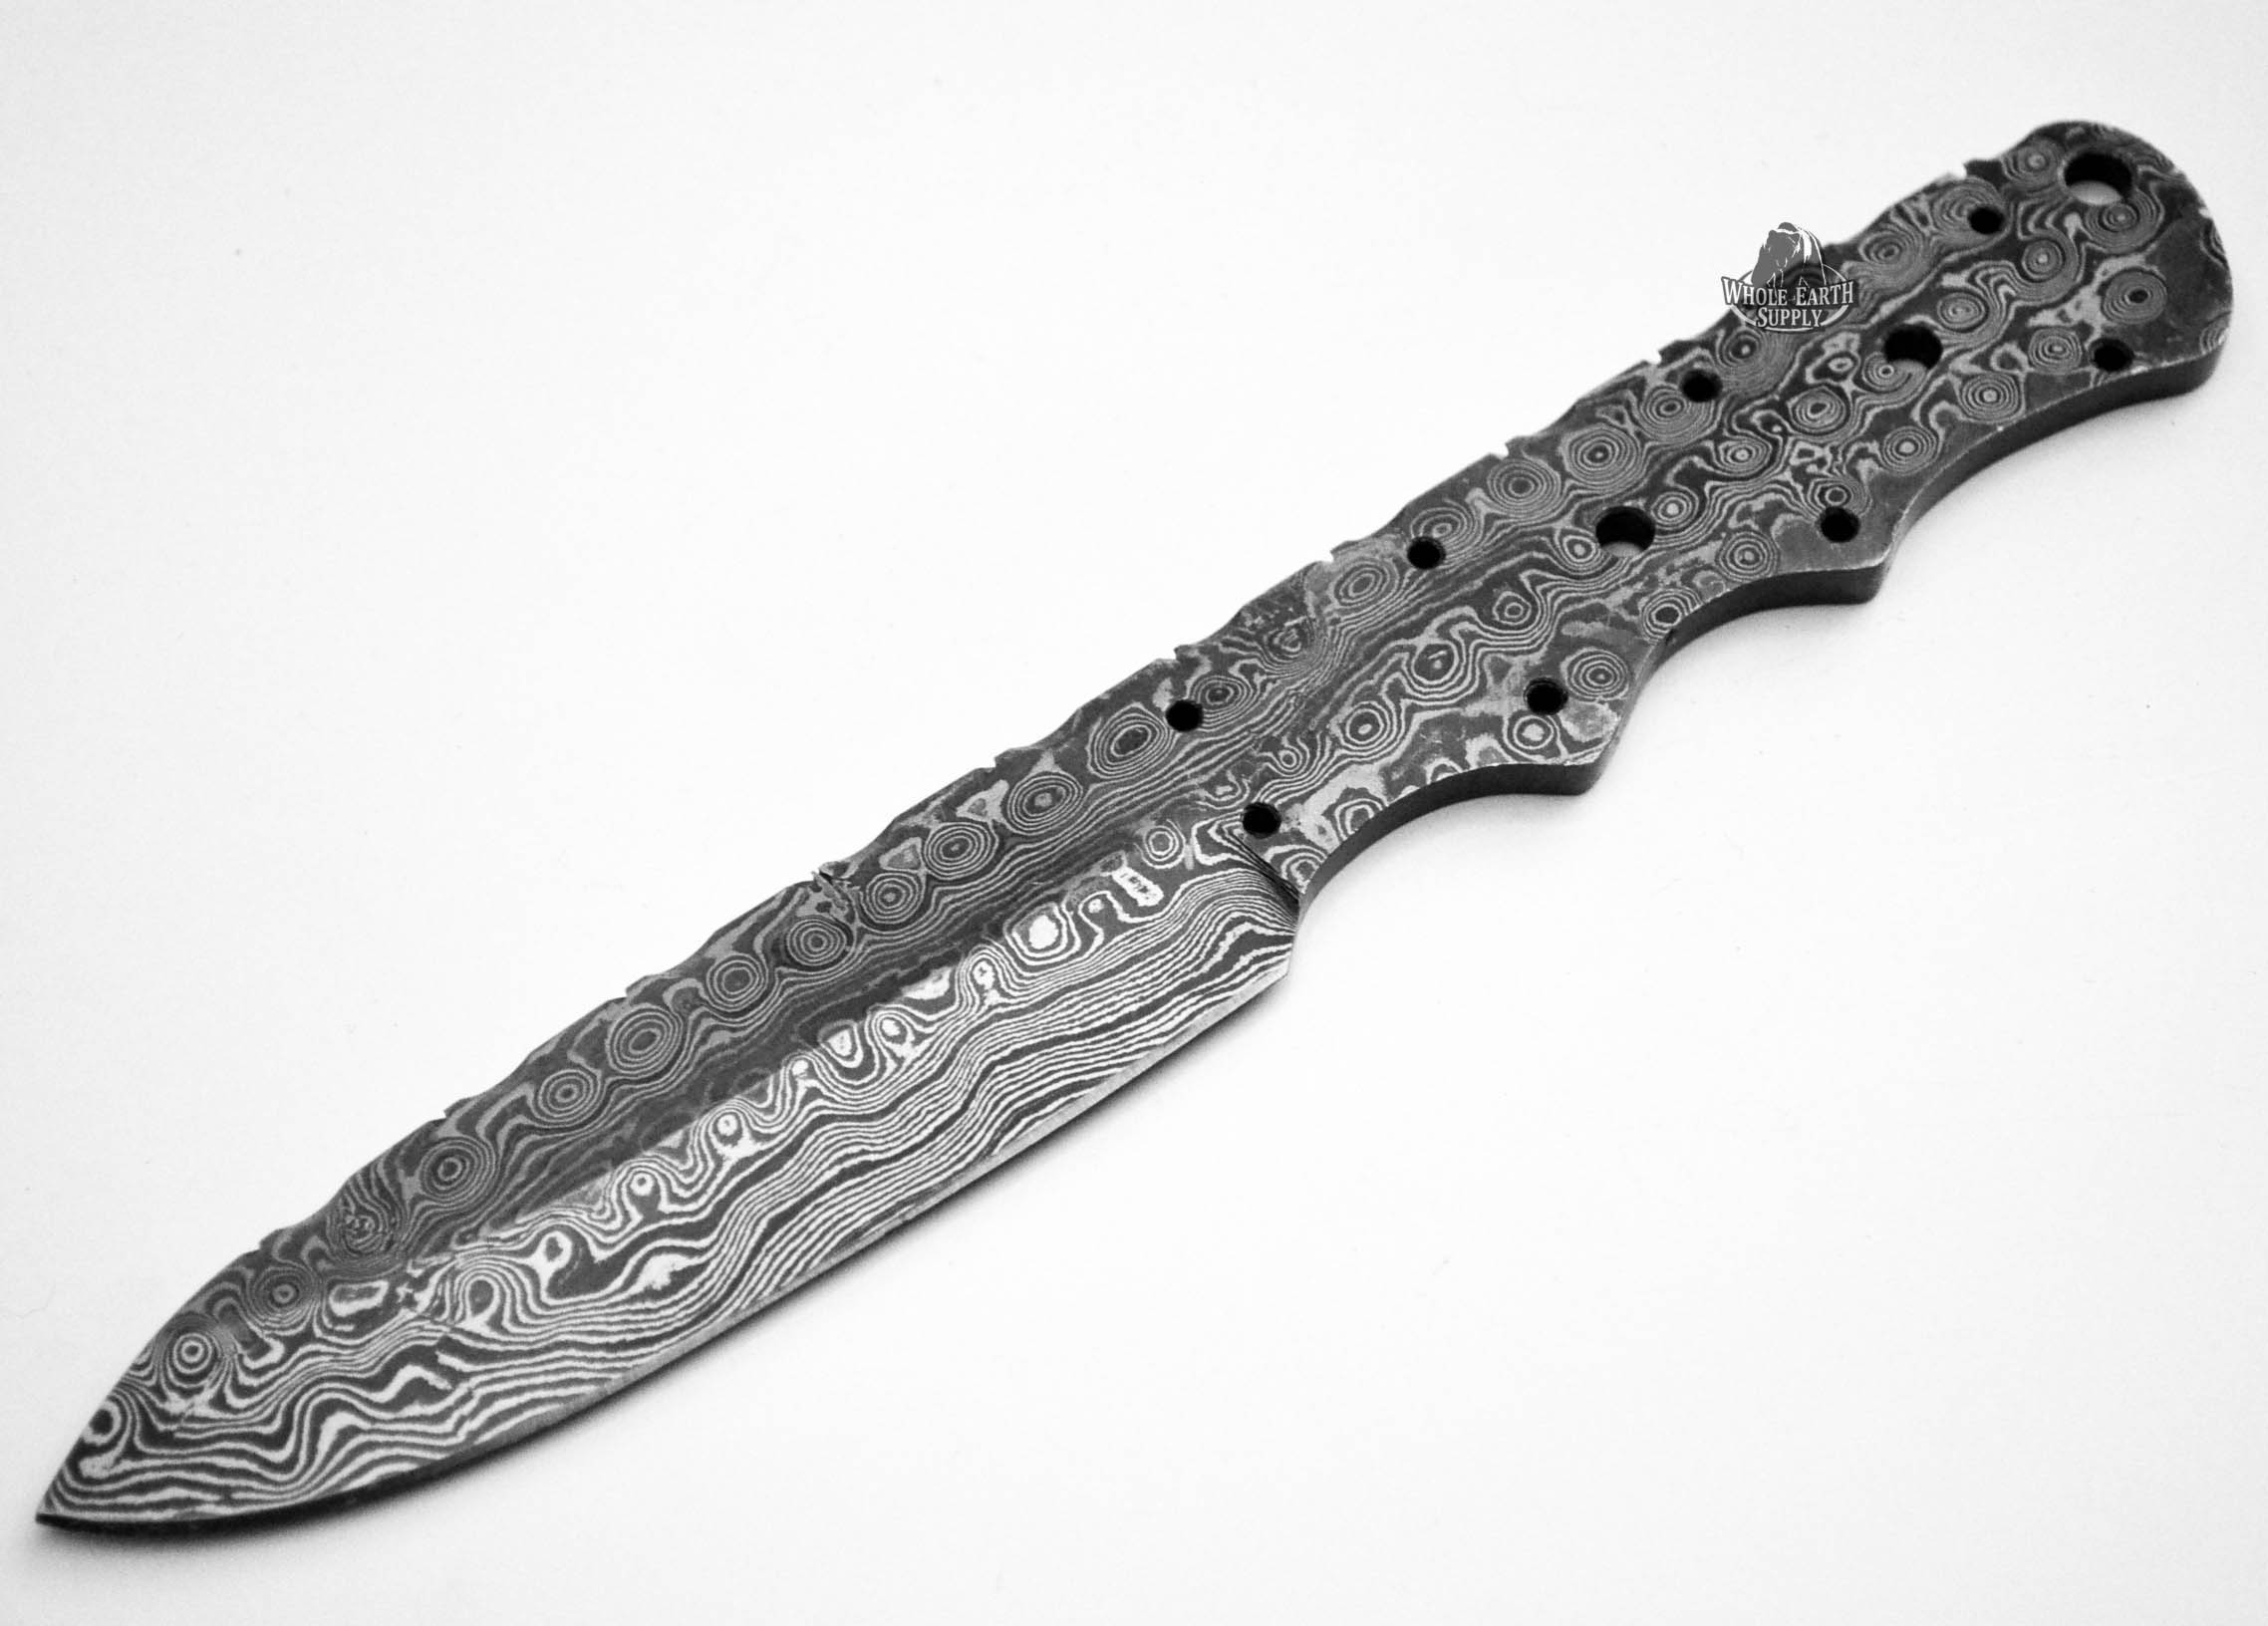 Drop Point Damascus Knife Blank Blade Hunting Skinning Skinner Best Steel 1095HC